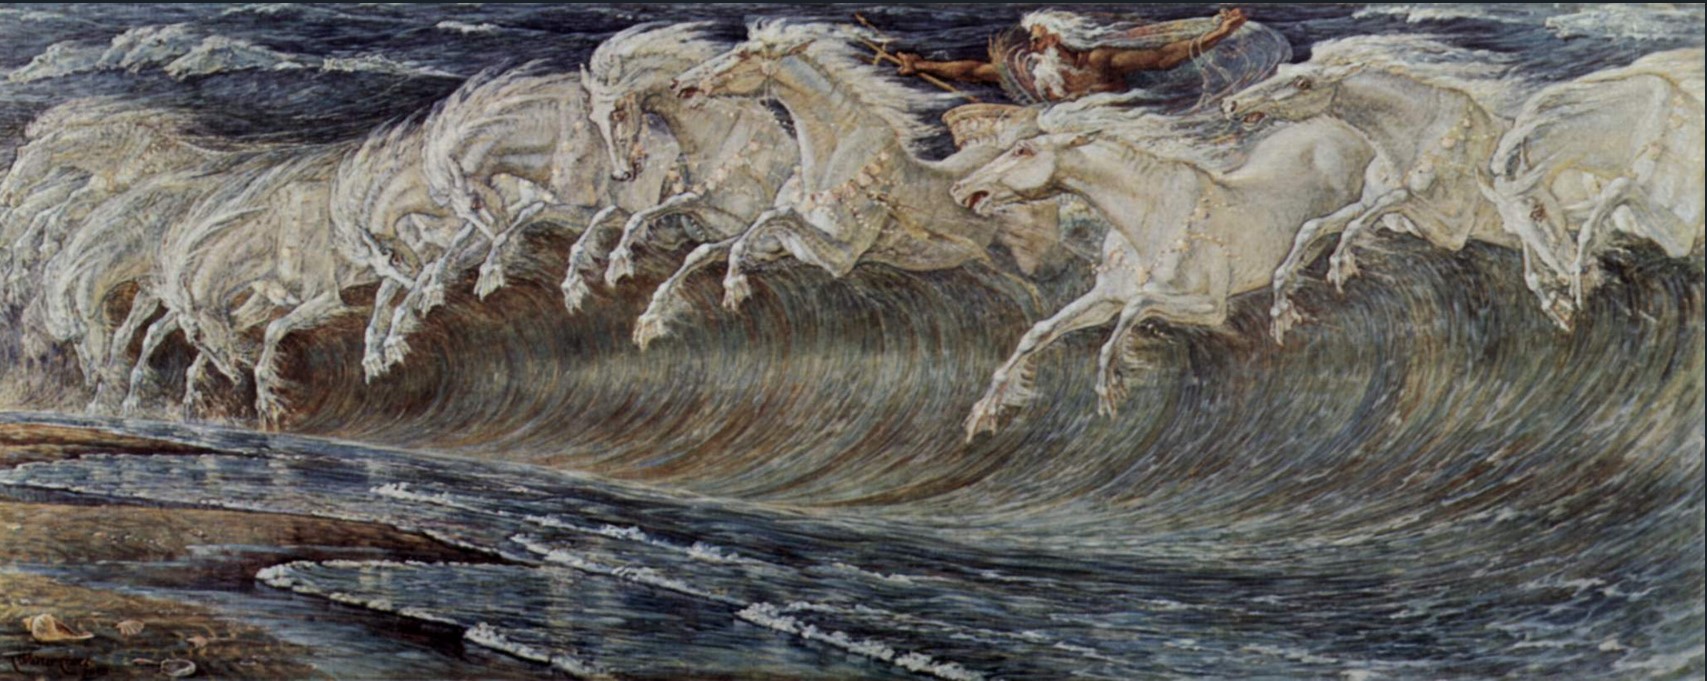 "Neptune's Horses" by Walter Crane